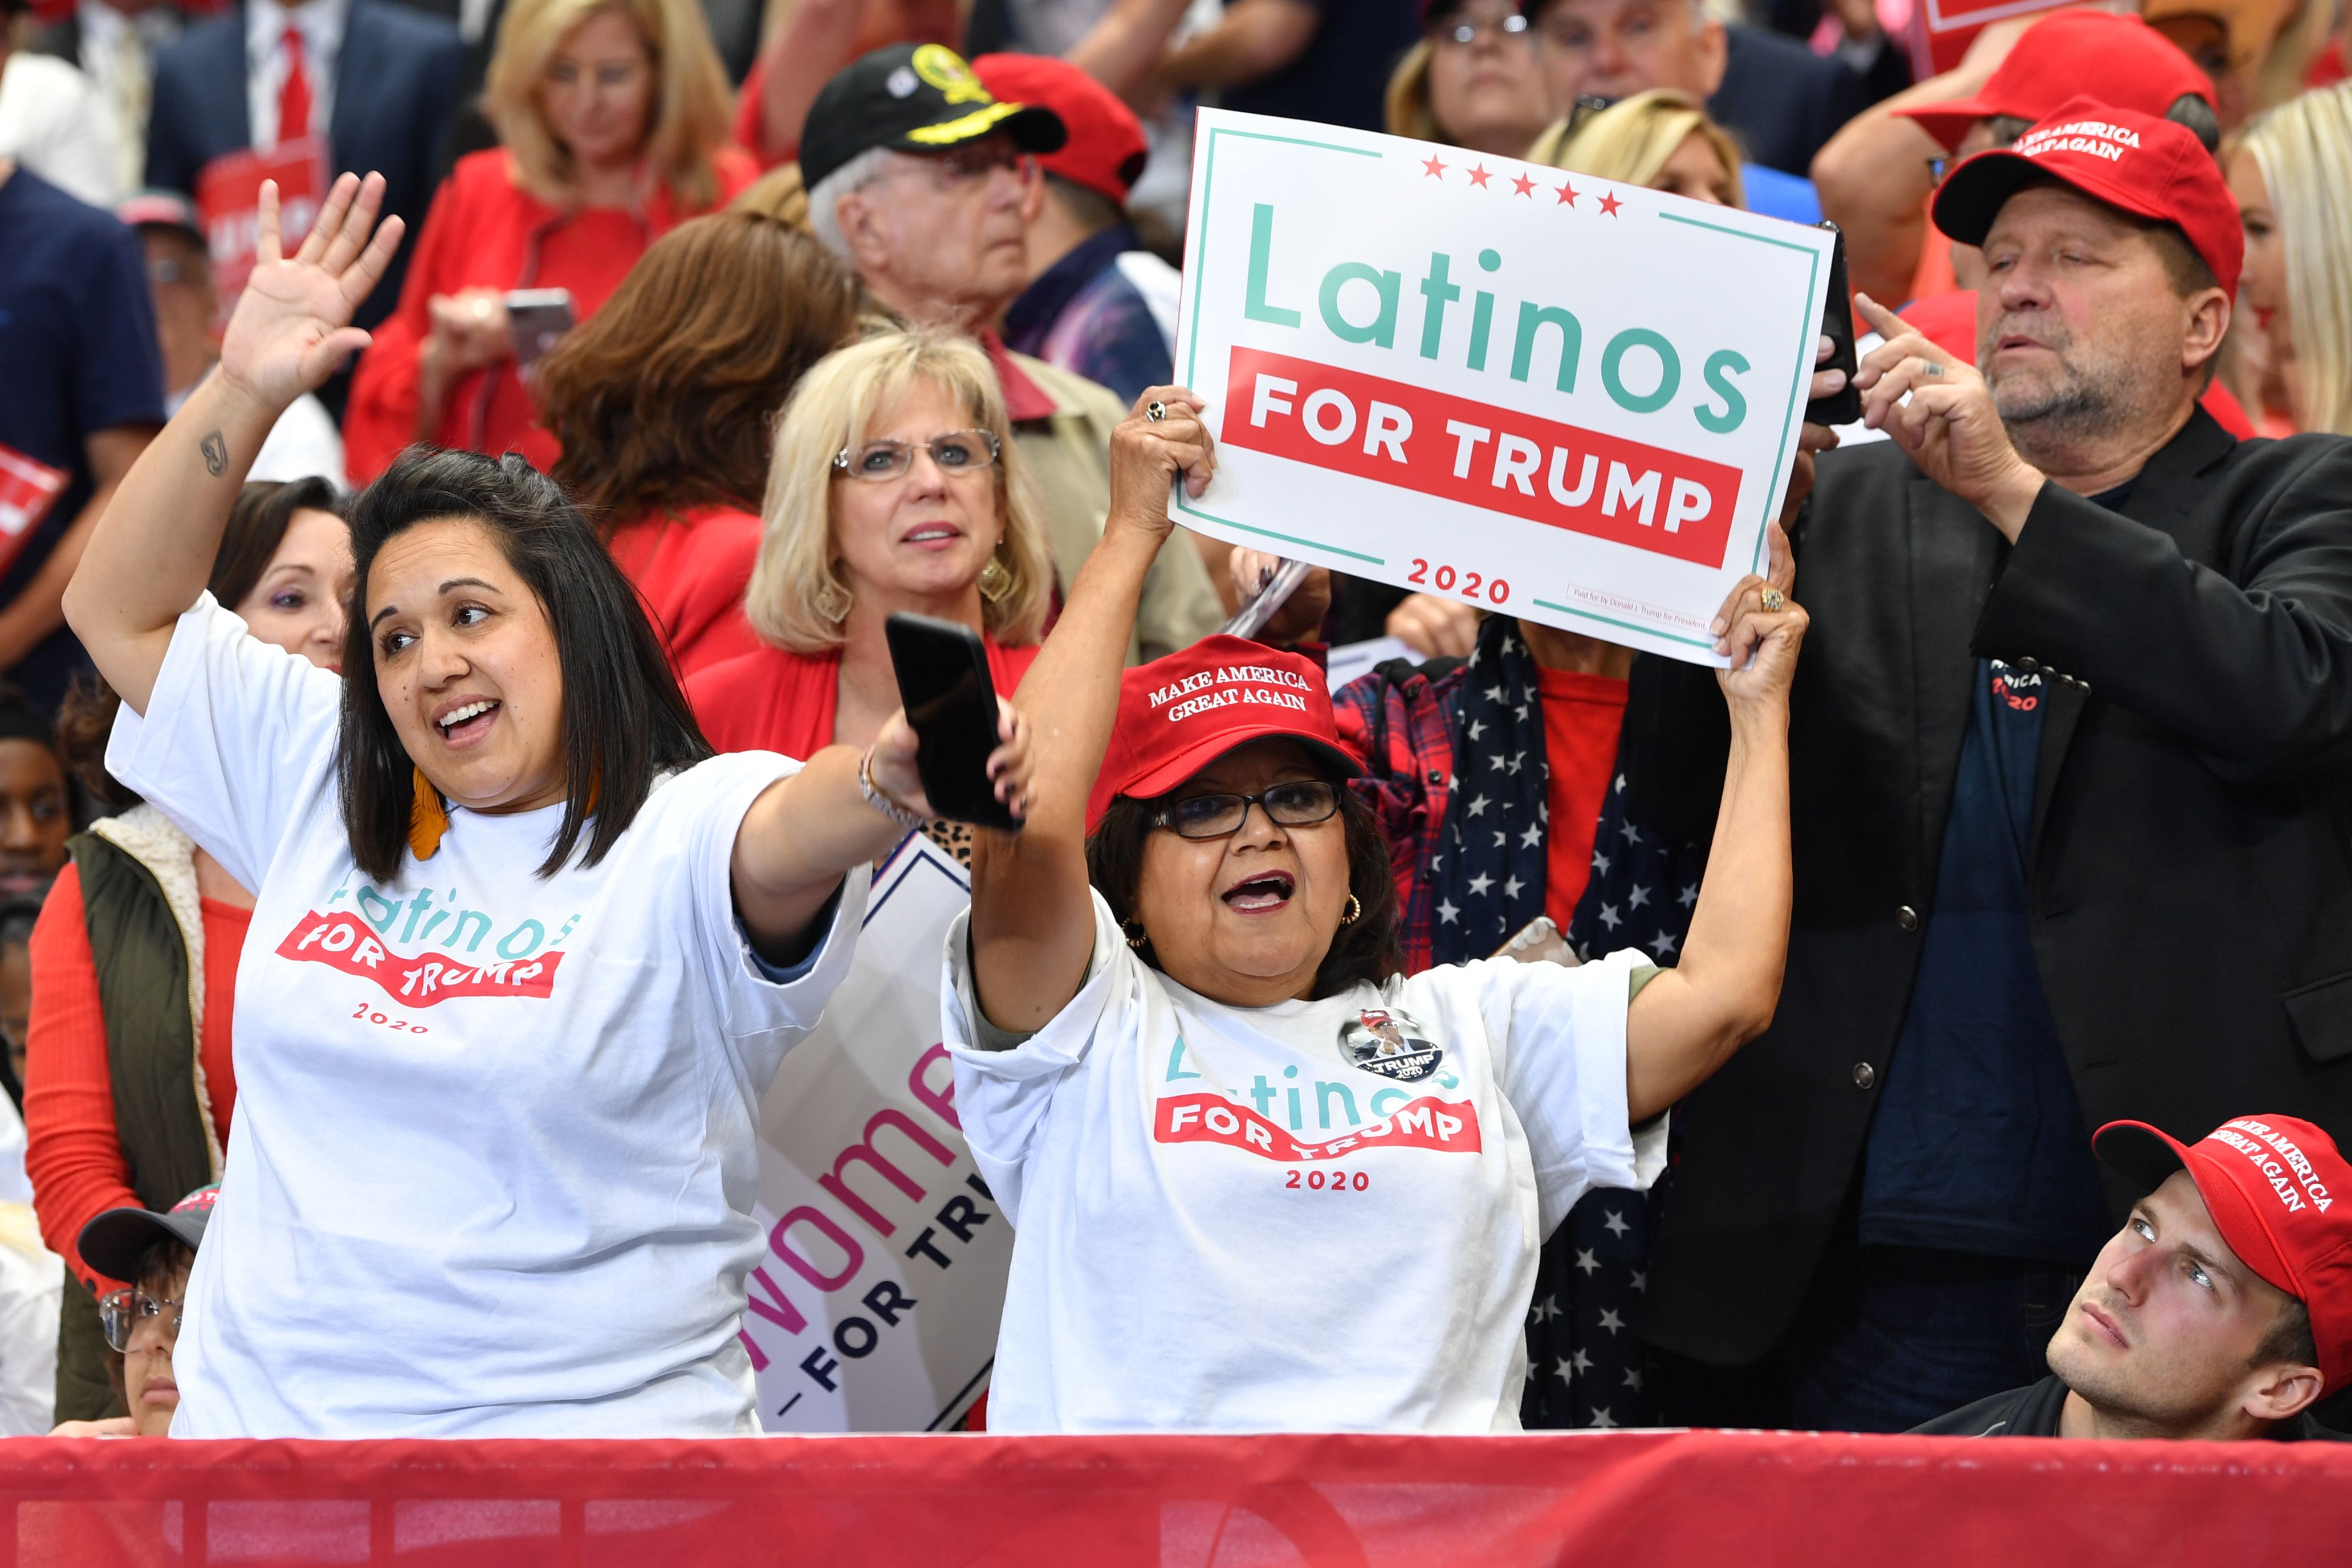 200914183910-latinos-for-trump